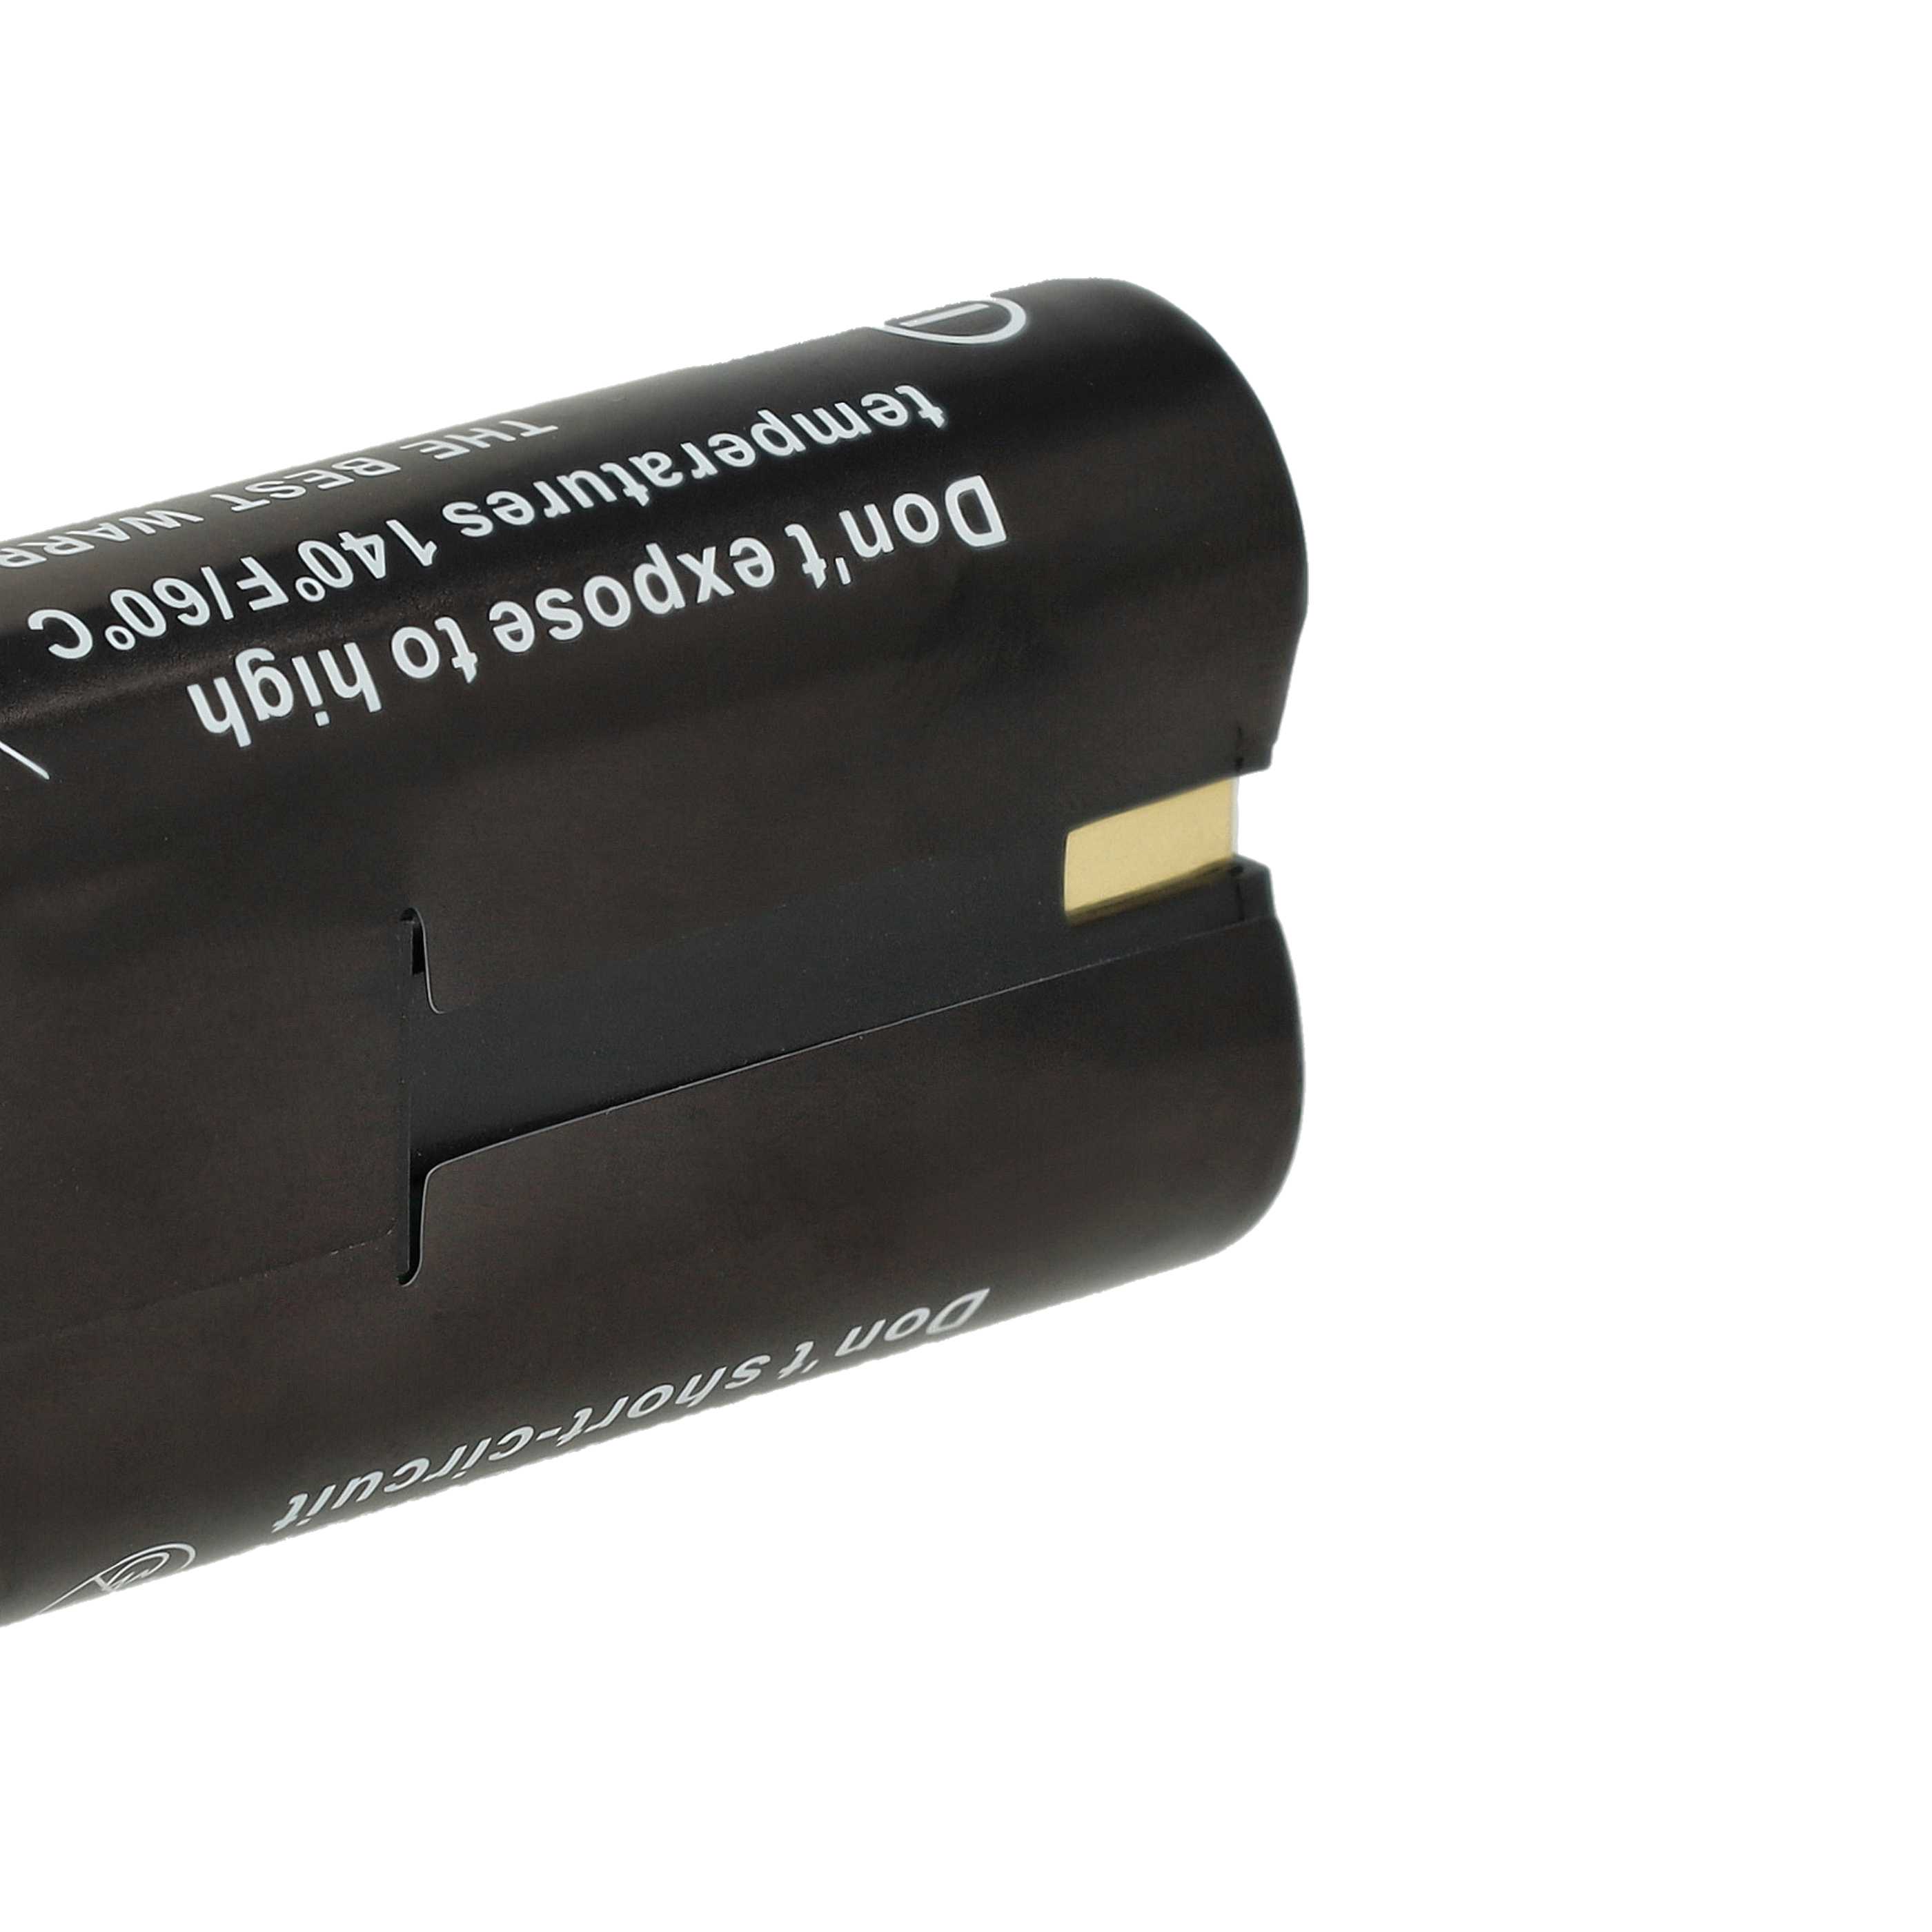 Batteria sostituisce Kodak Klic-8000, RB50 per fotocamera - 1520mAh 3,6V Li-Ion